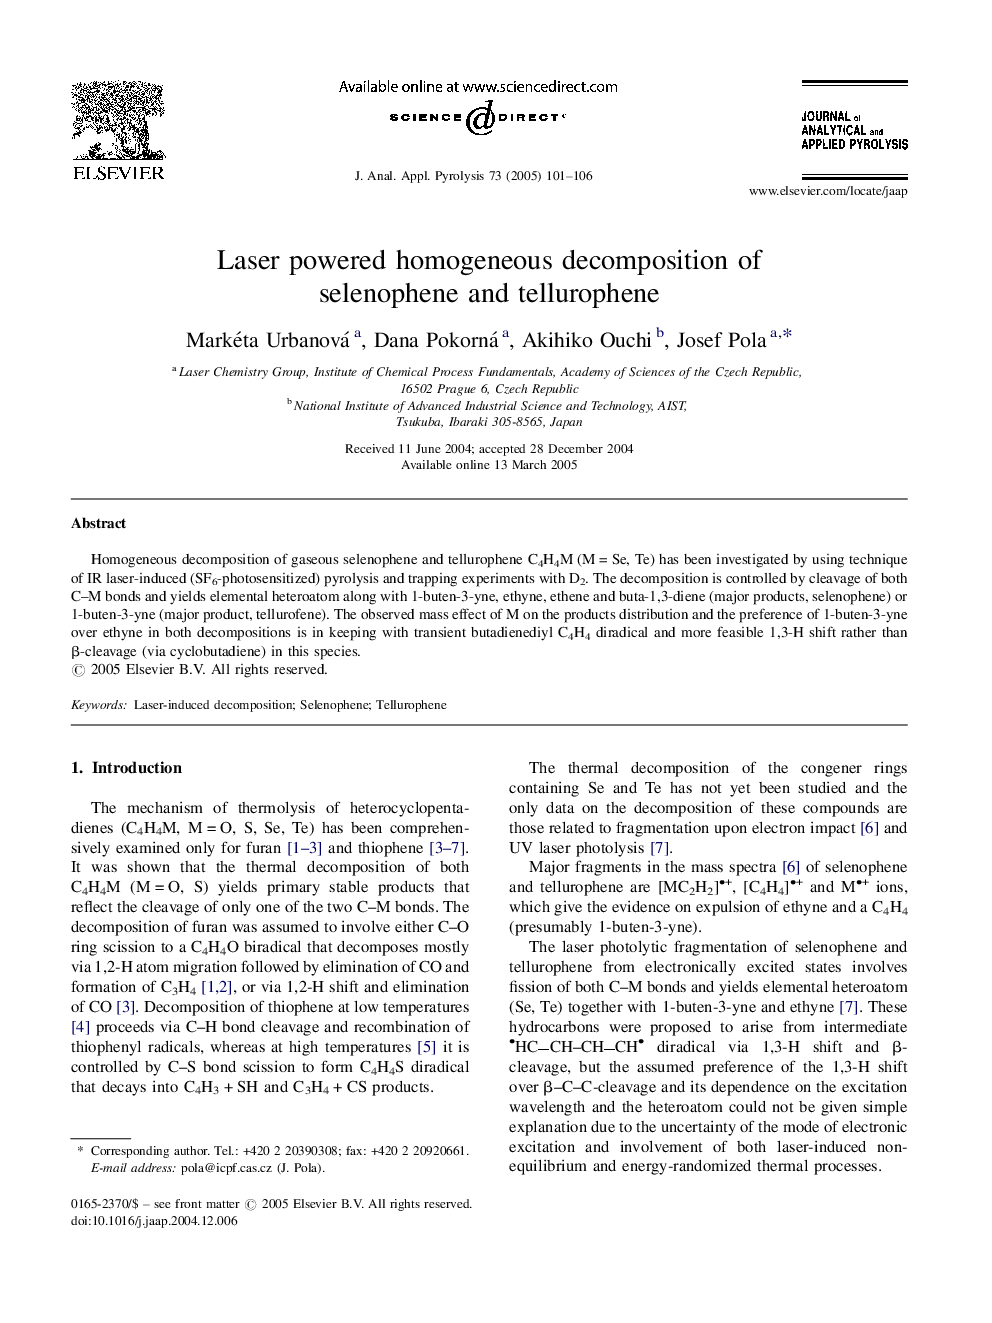 Laser powered homogeneous decomposition of selenophene and tellurophene